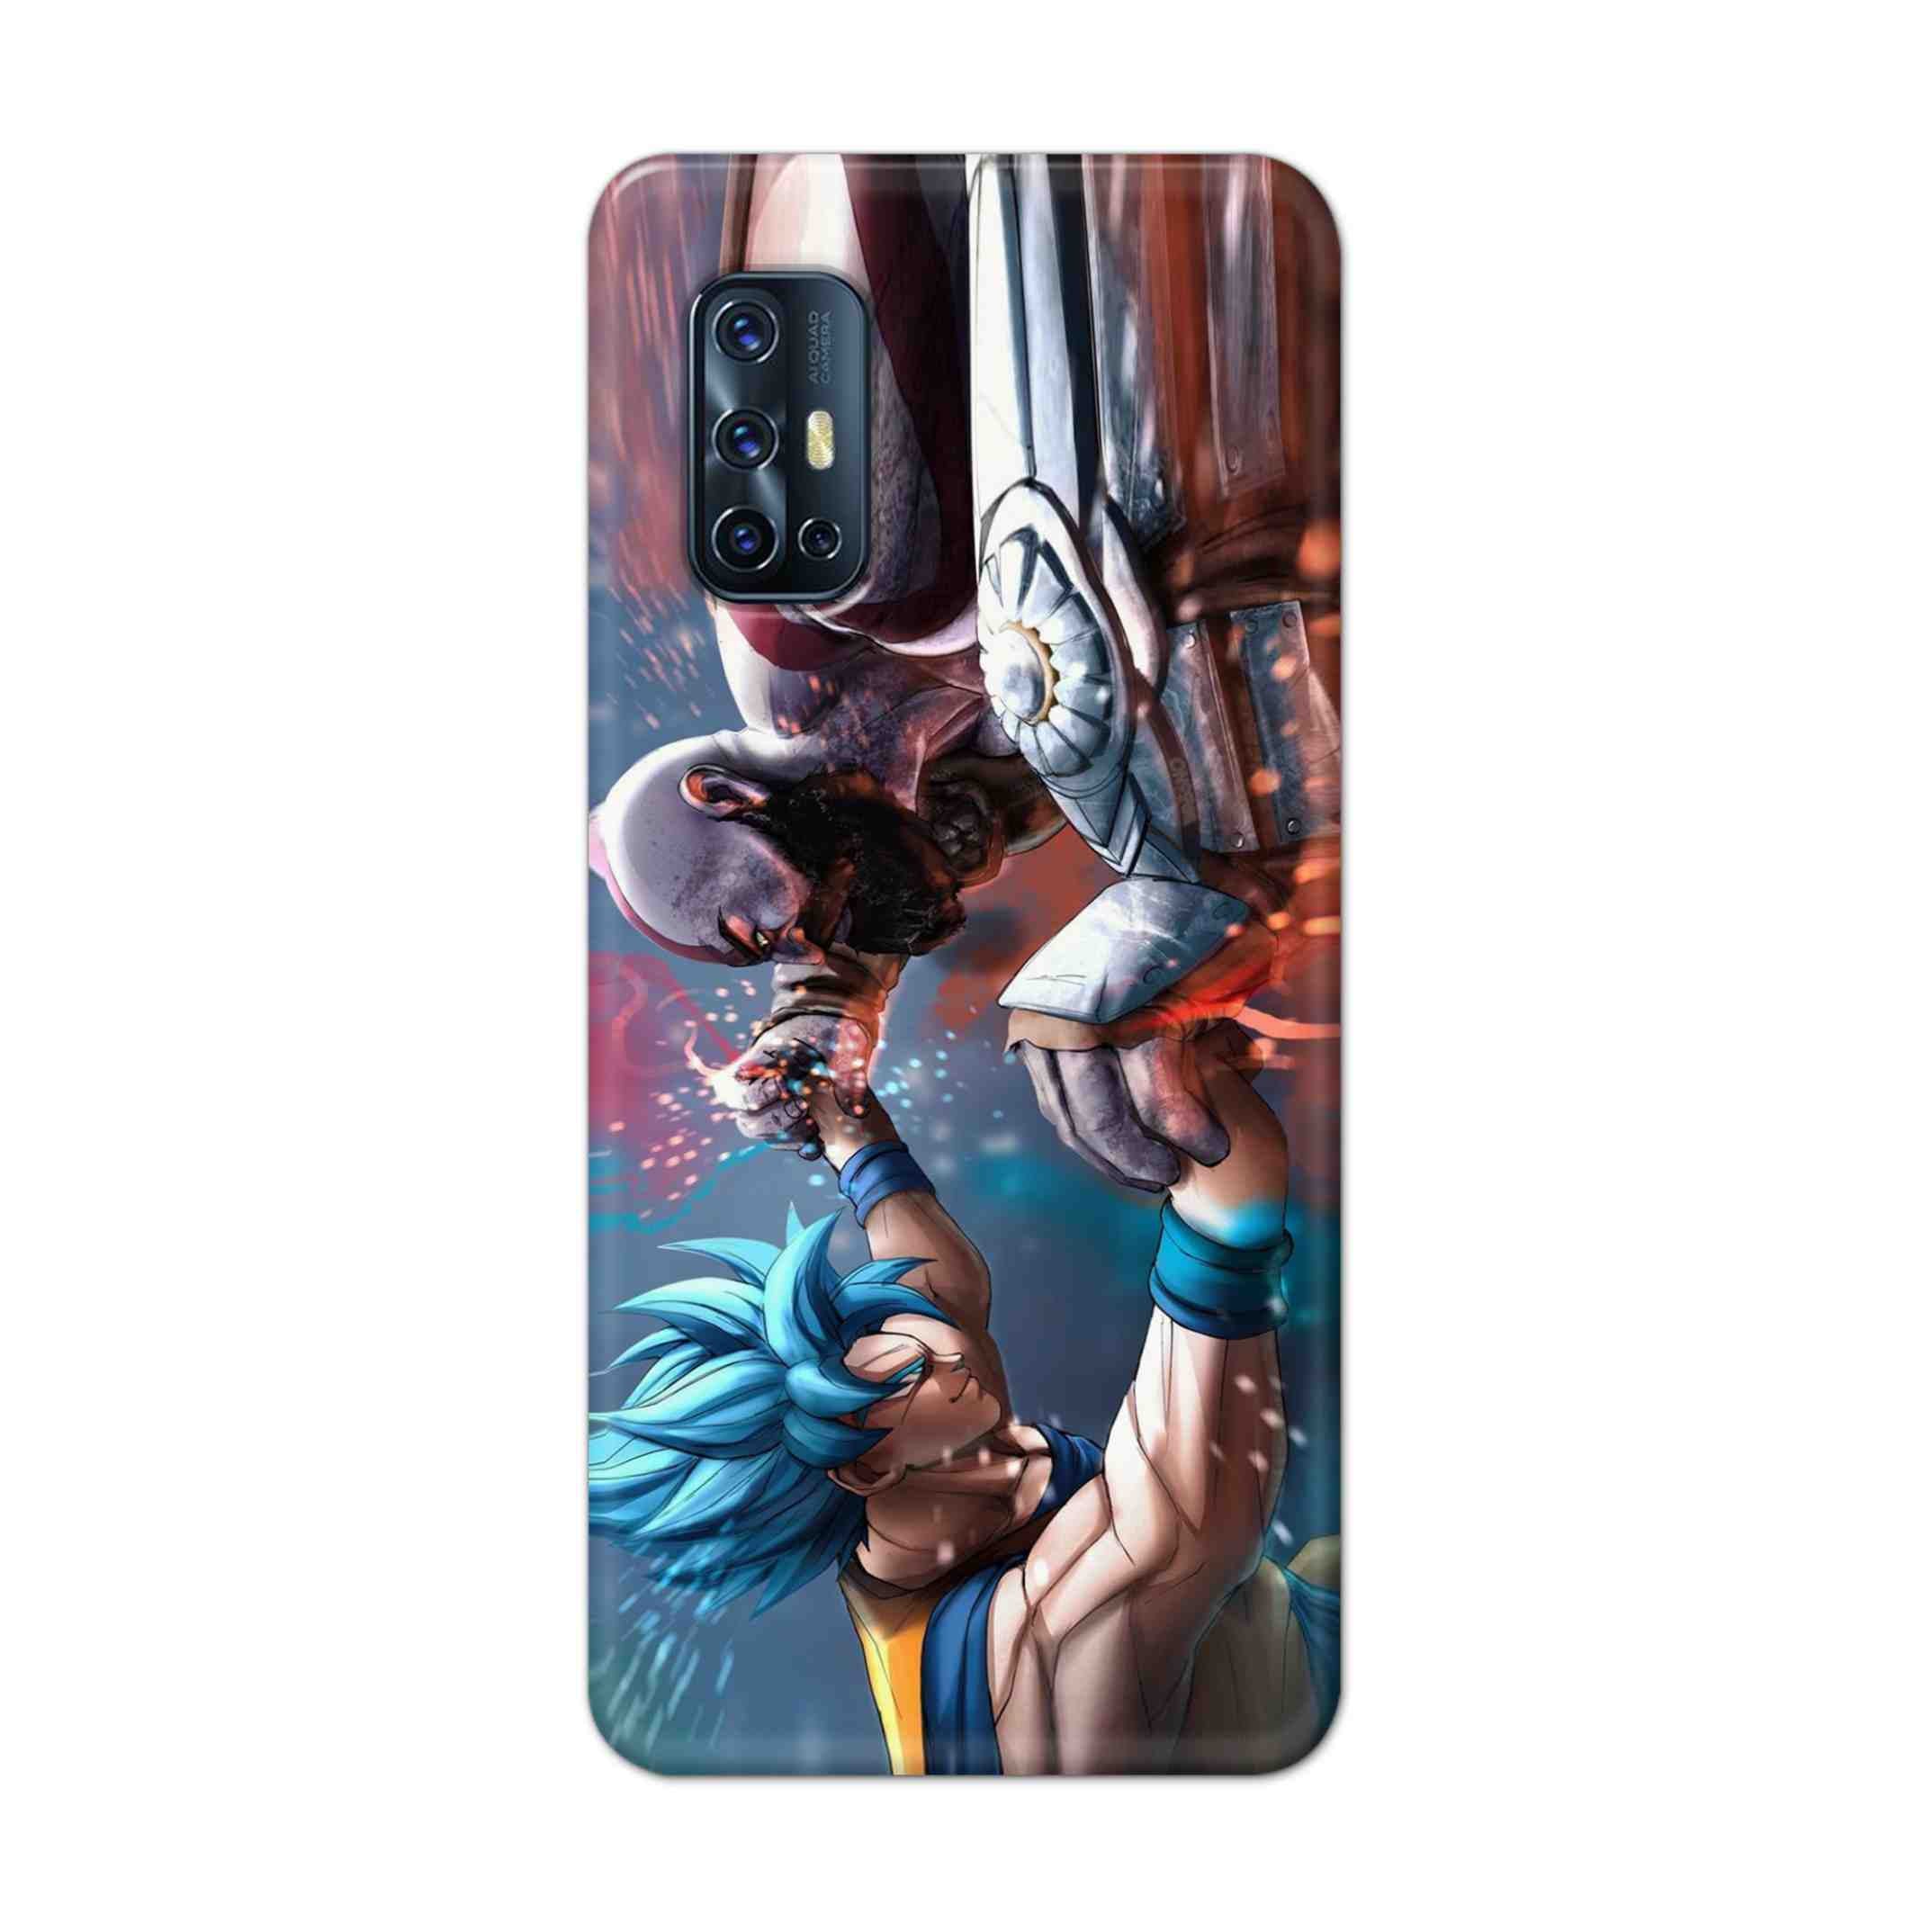 Buy Goku Vs Kratos Hard Back Mobile Phone Case Cover For Vivo V17 Online